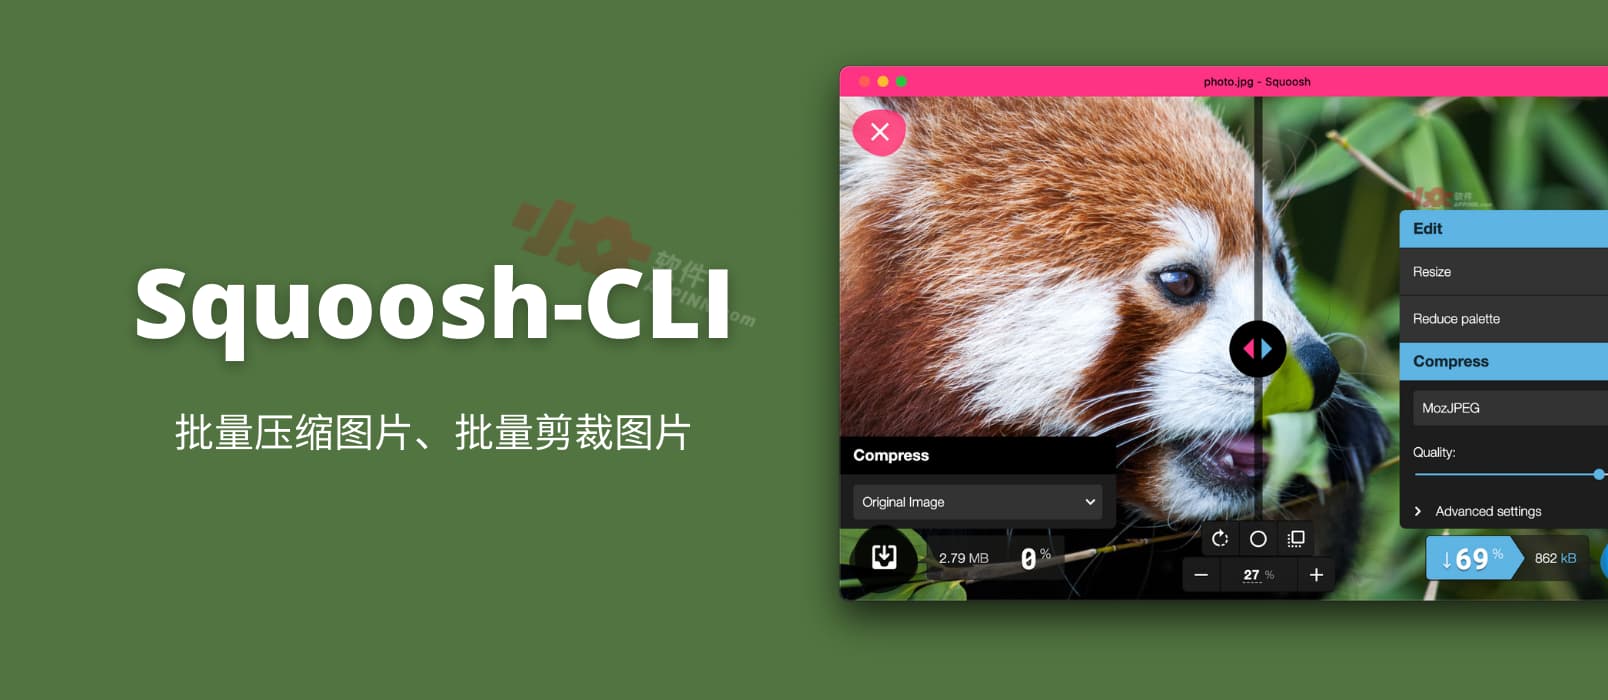 Squoosh-CLI - 批量图片压缩、批量图片格式转换、批量图片剪裁